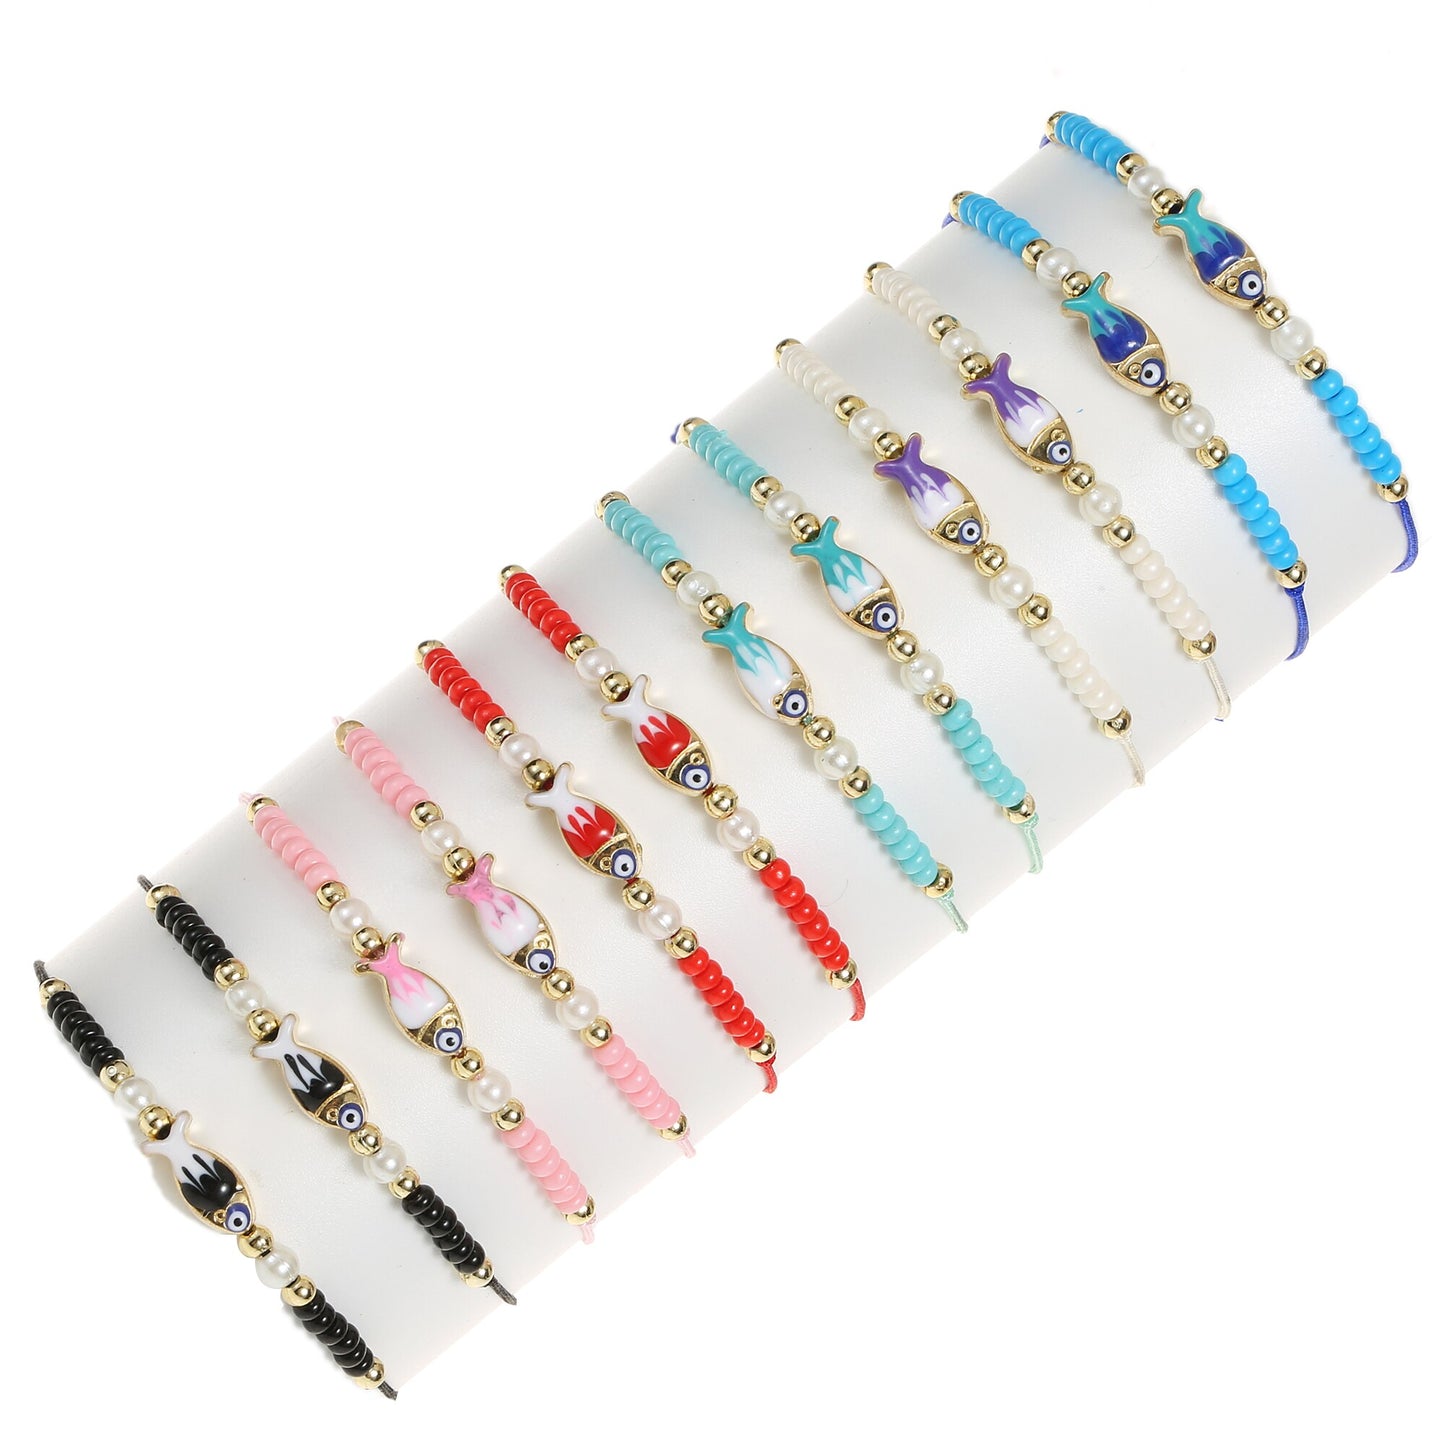 12 Pieces Girls Bracelets Adjustable Cute Fish Animal Friendship Bracelet Jewelry for Kid Party Favor Adjustable Pearl Bracelet